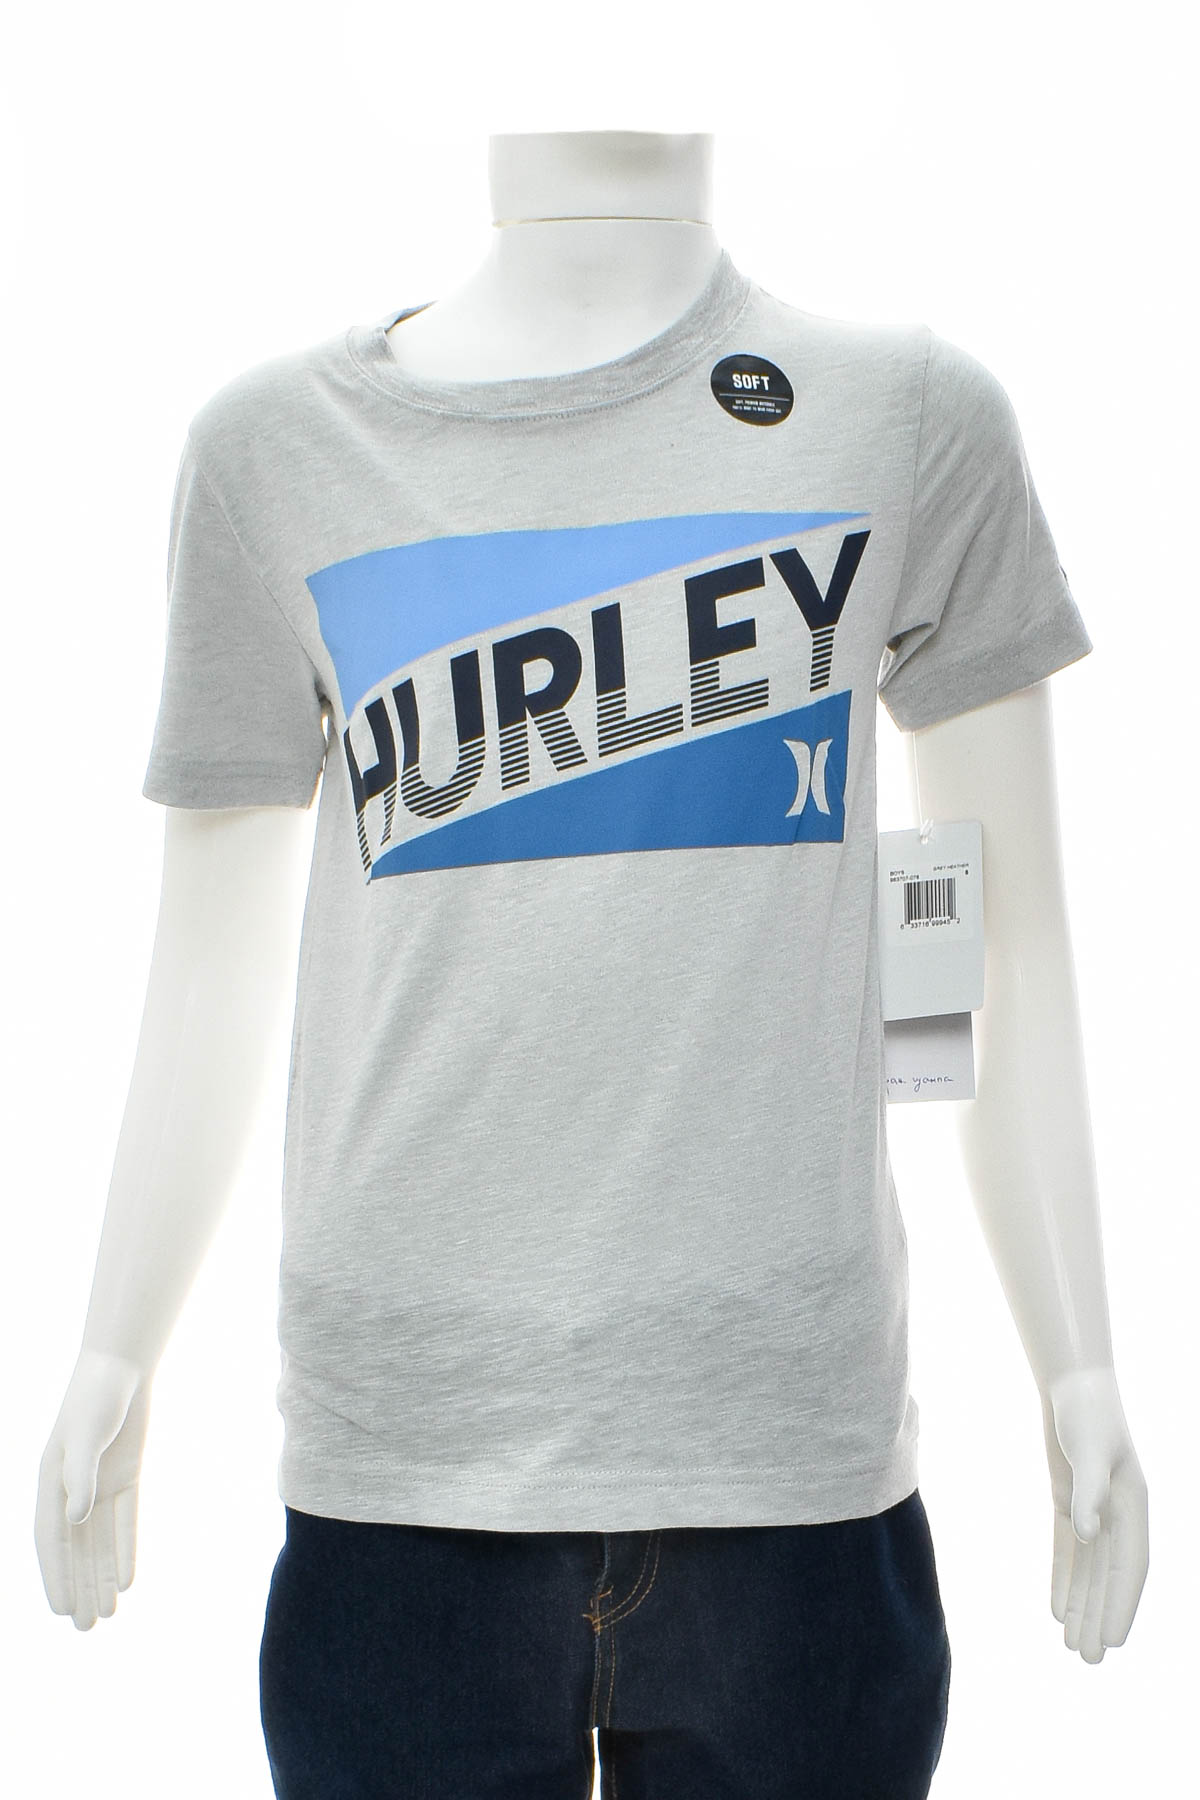 Boy's t-shirt - Hurley - 0